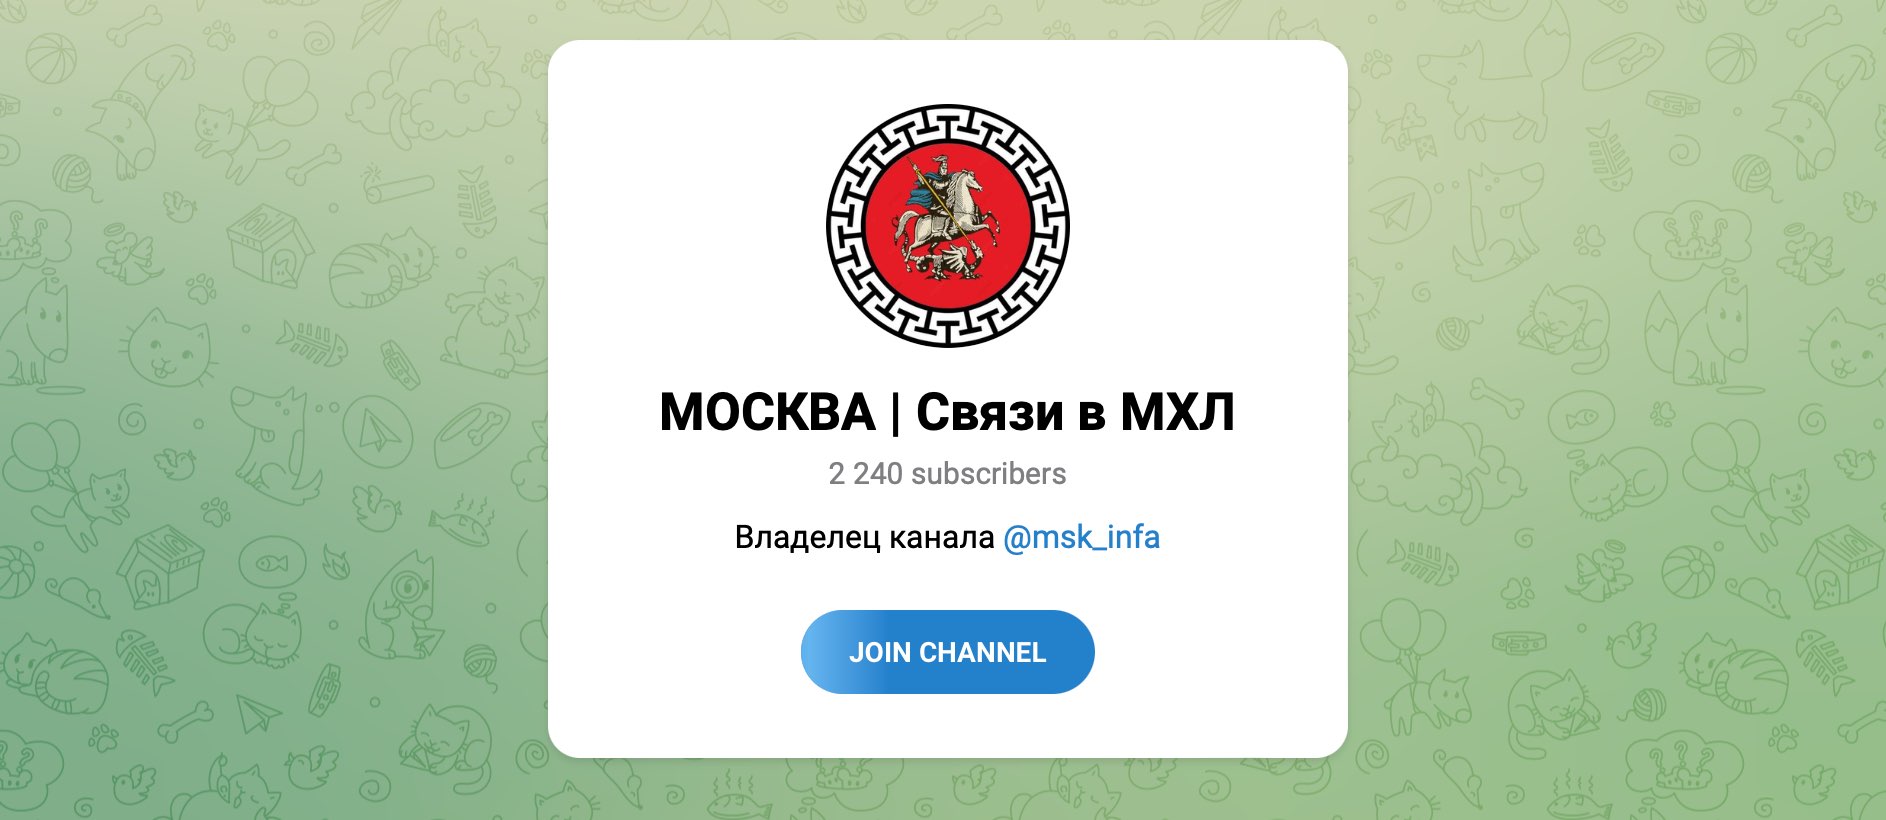 Внешний вид телеграм канала МОСКВА | Связи в МХЛ